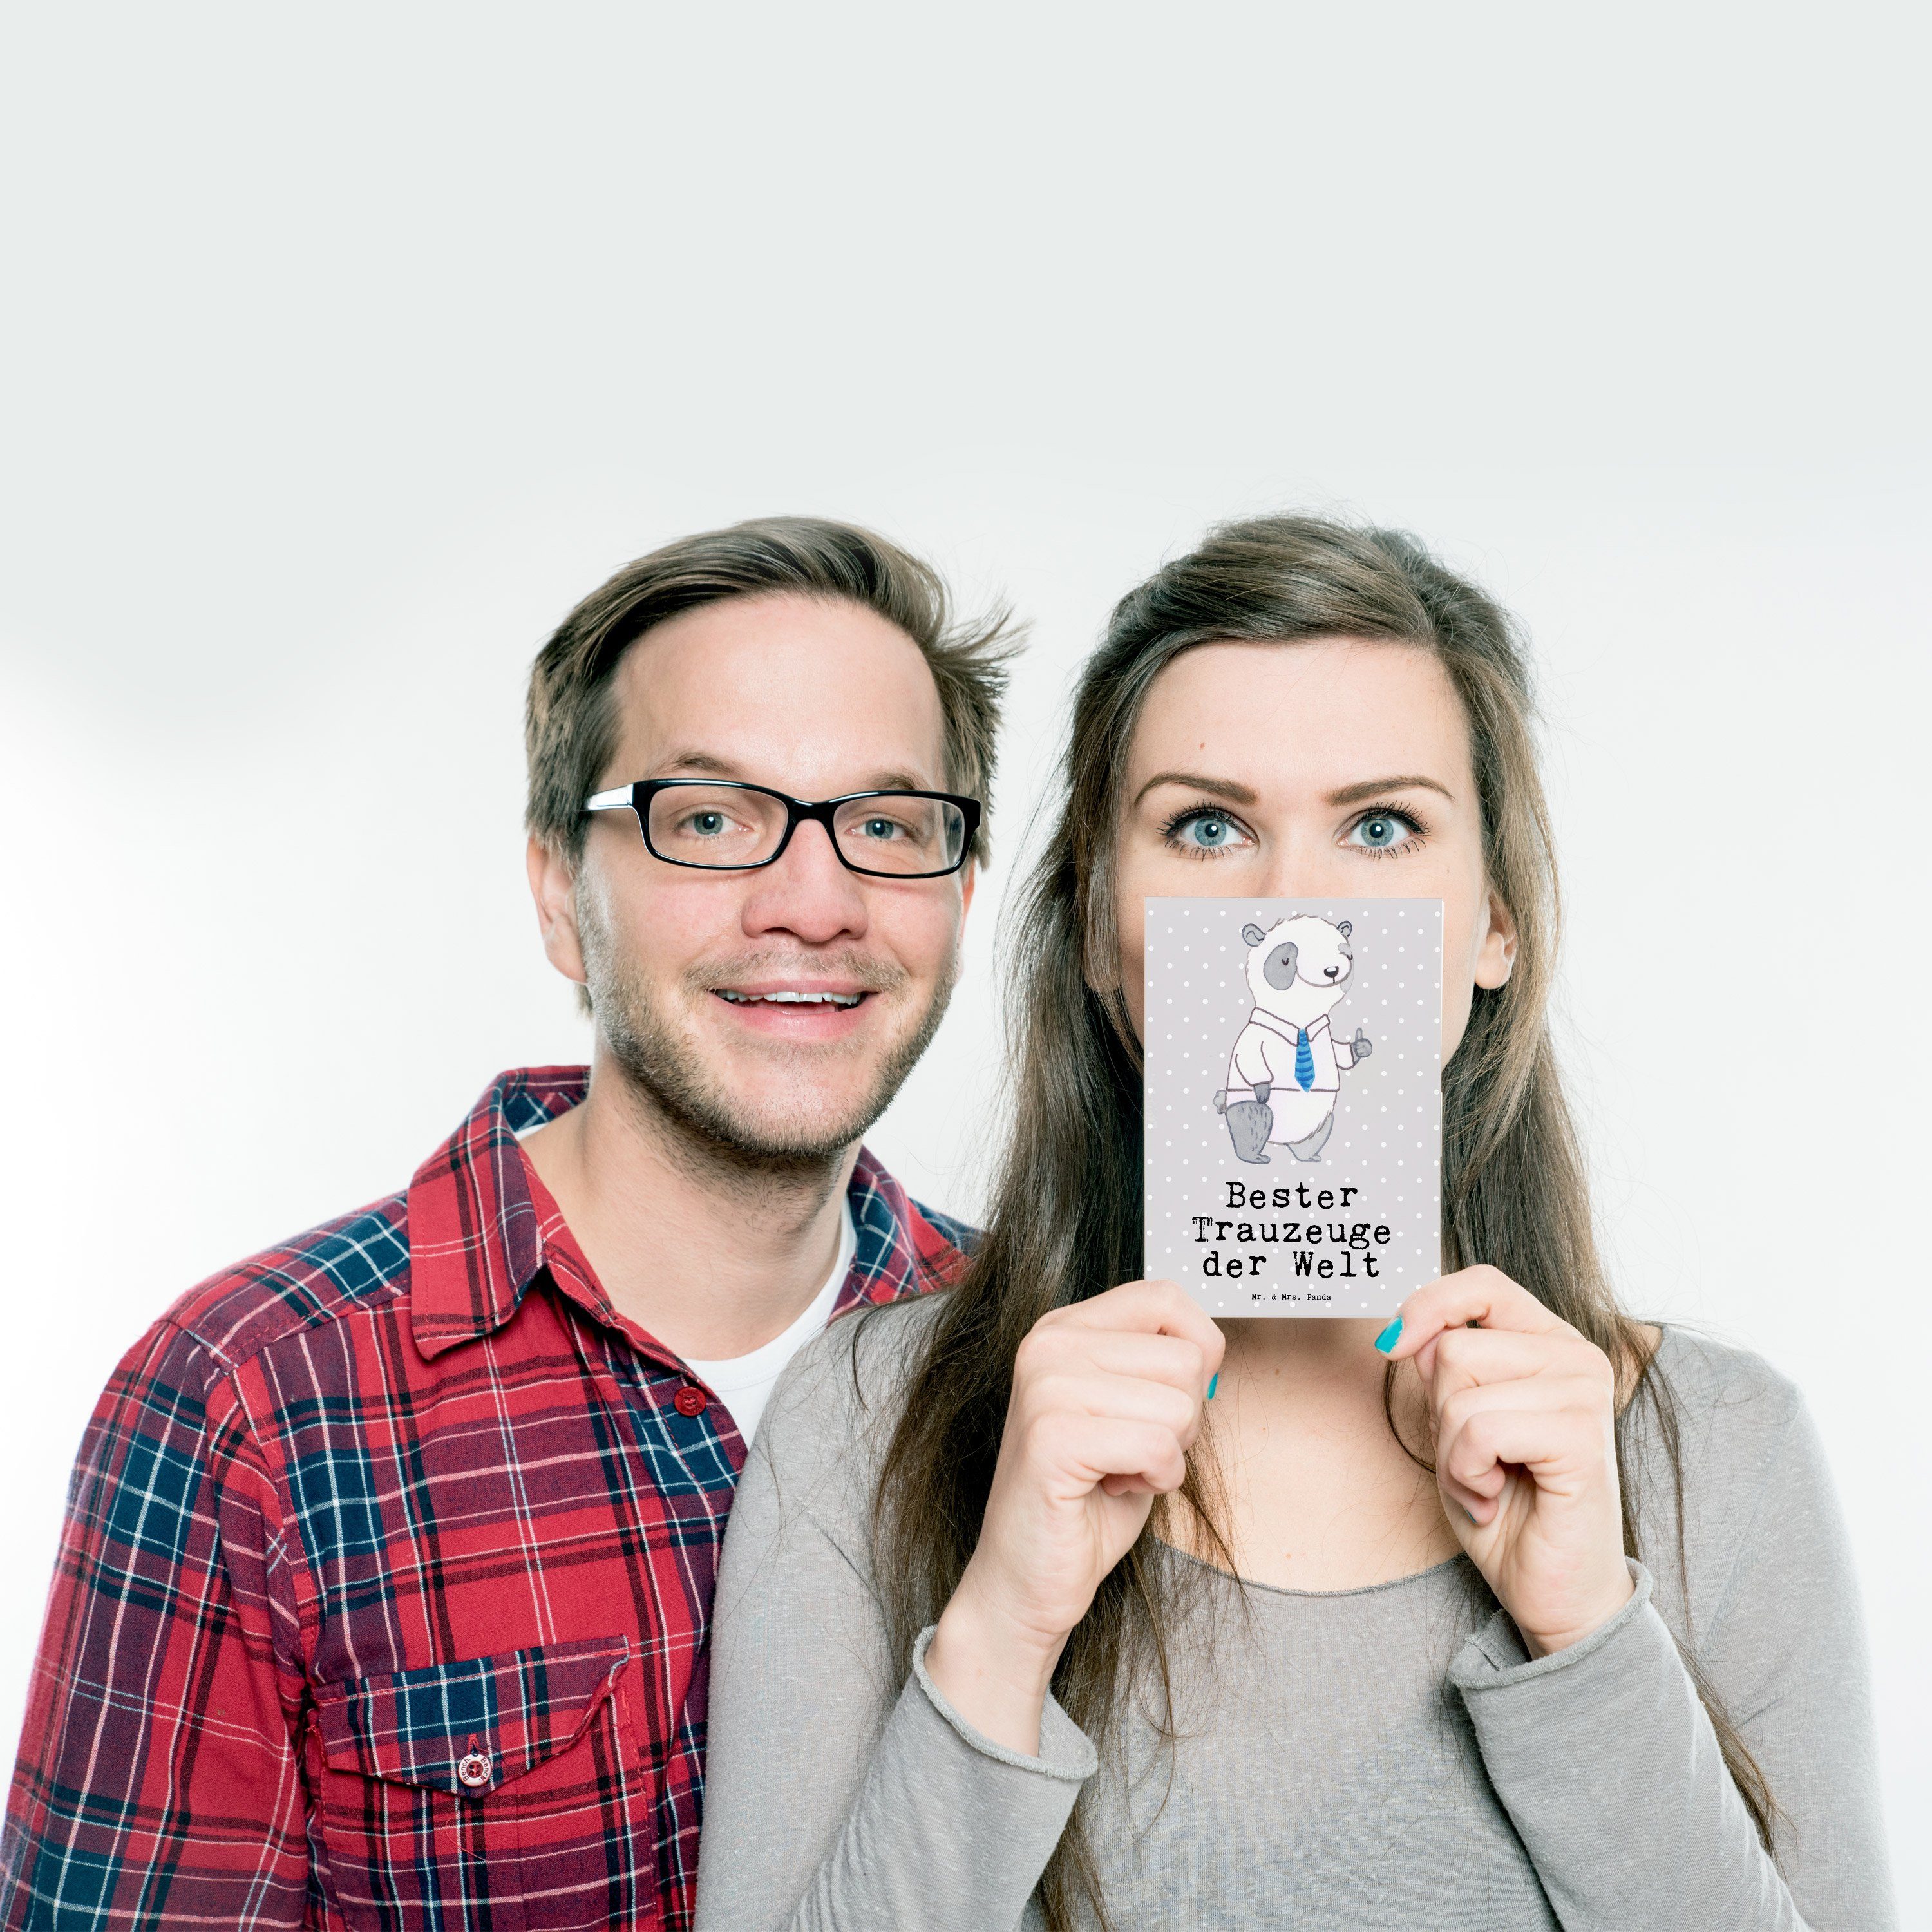 Mr. & Mrs. Pastell Bester Grau - Geschenk, Bräutigam Trauzeuge Postkarte Panda Welt - der Panda